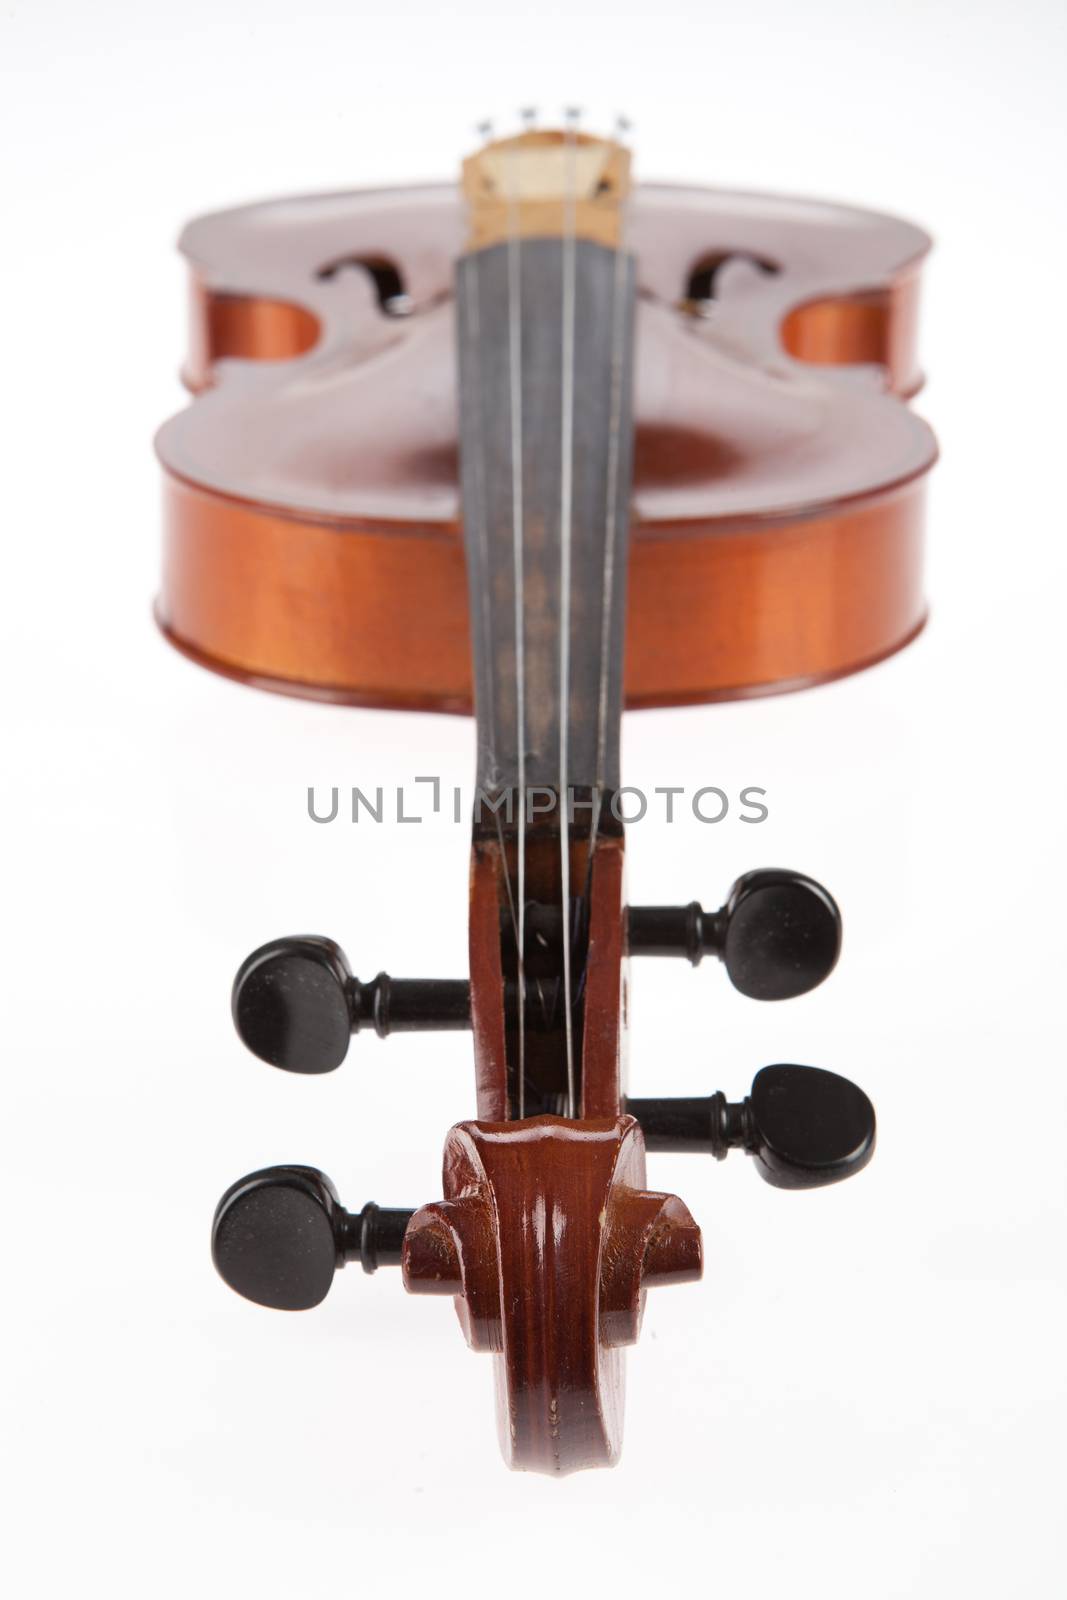 Violin by Fotoskat